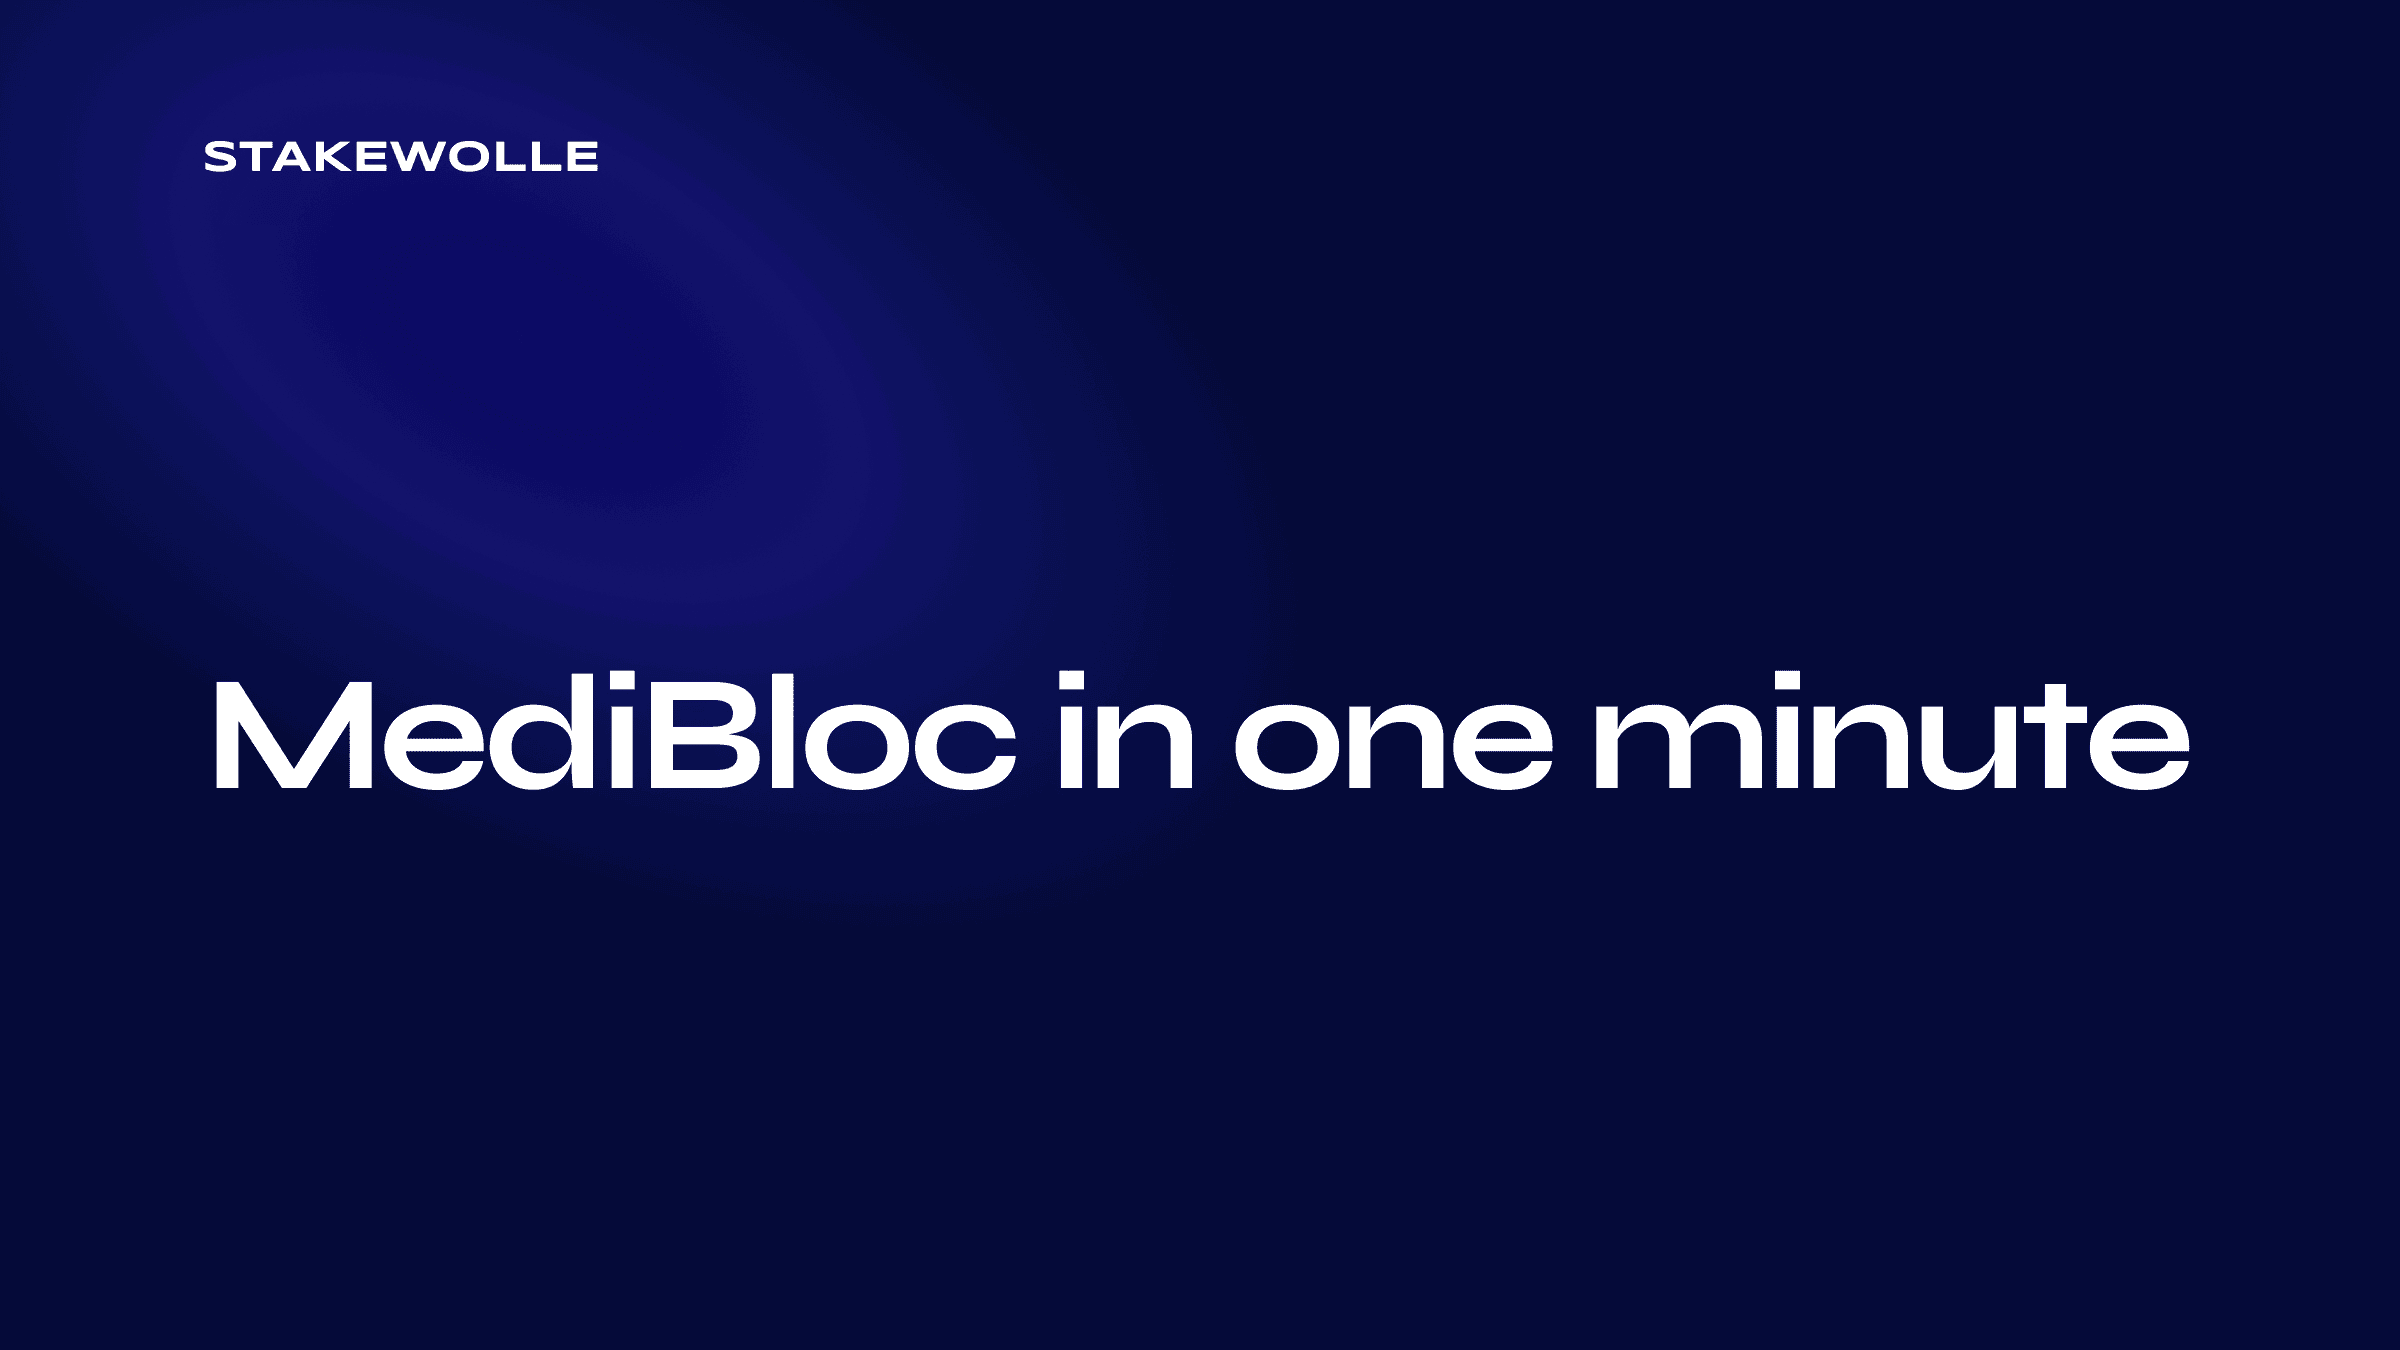 MediBloc in one minute